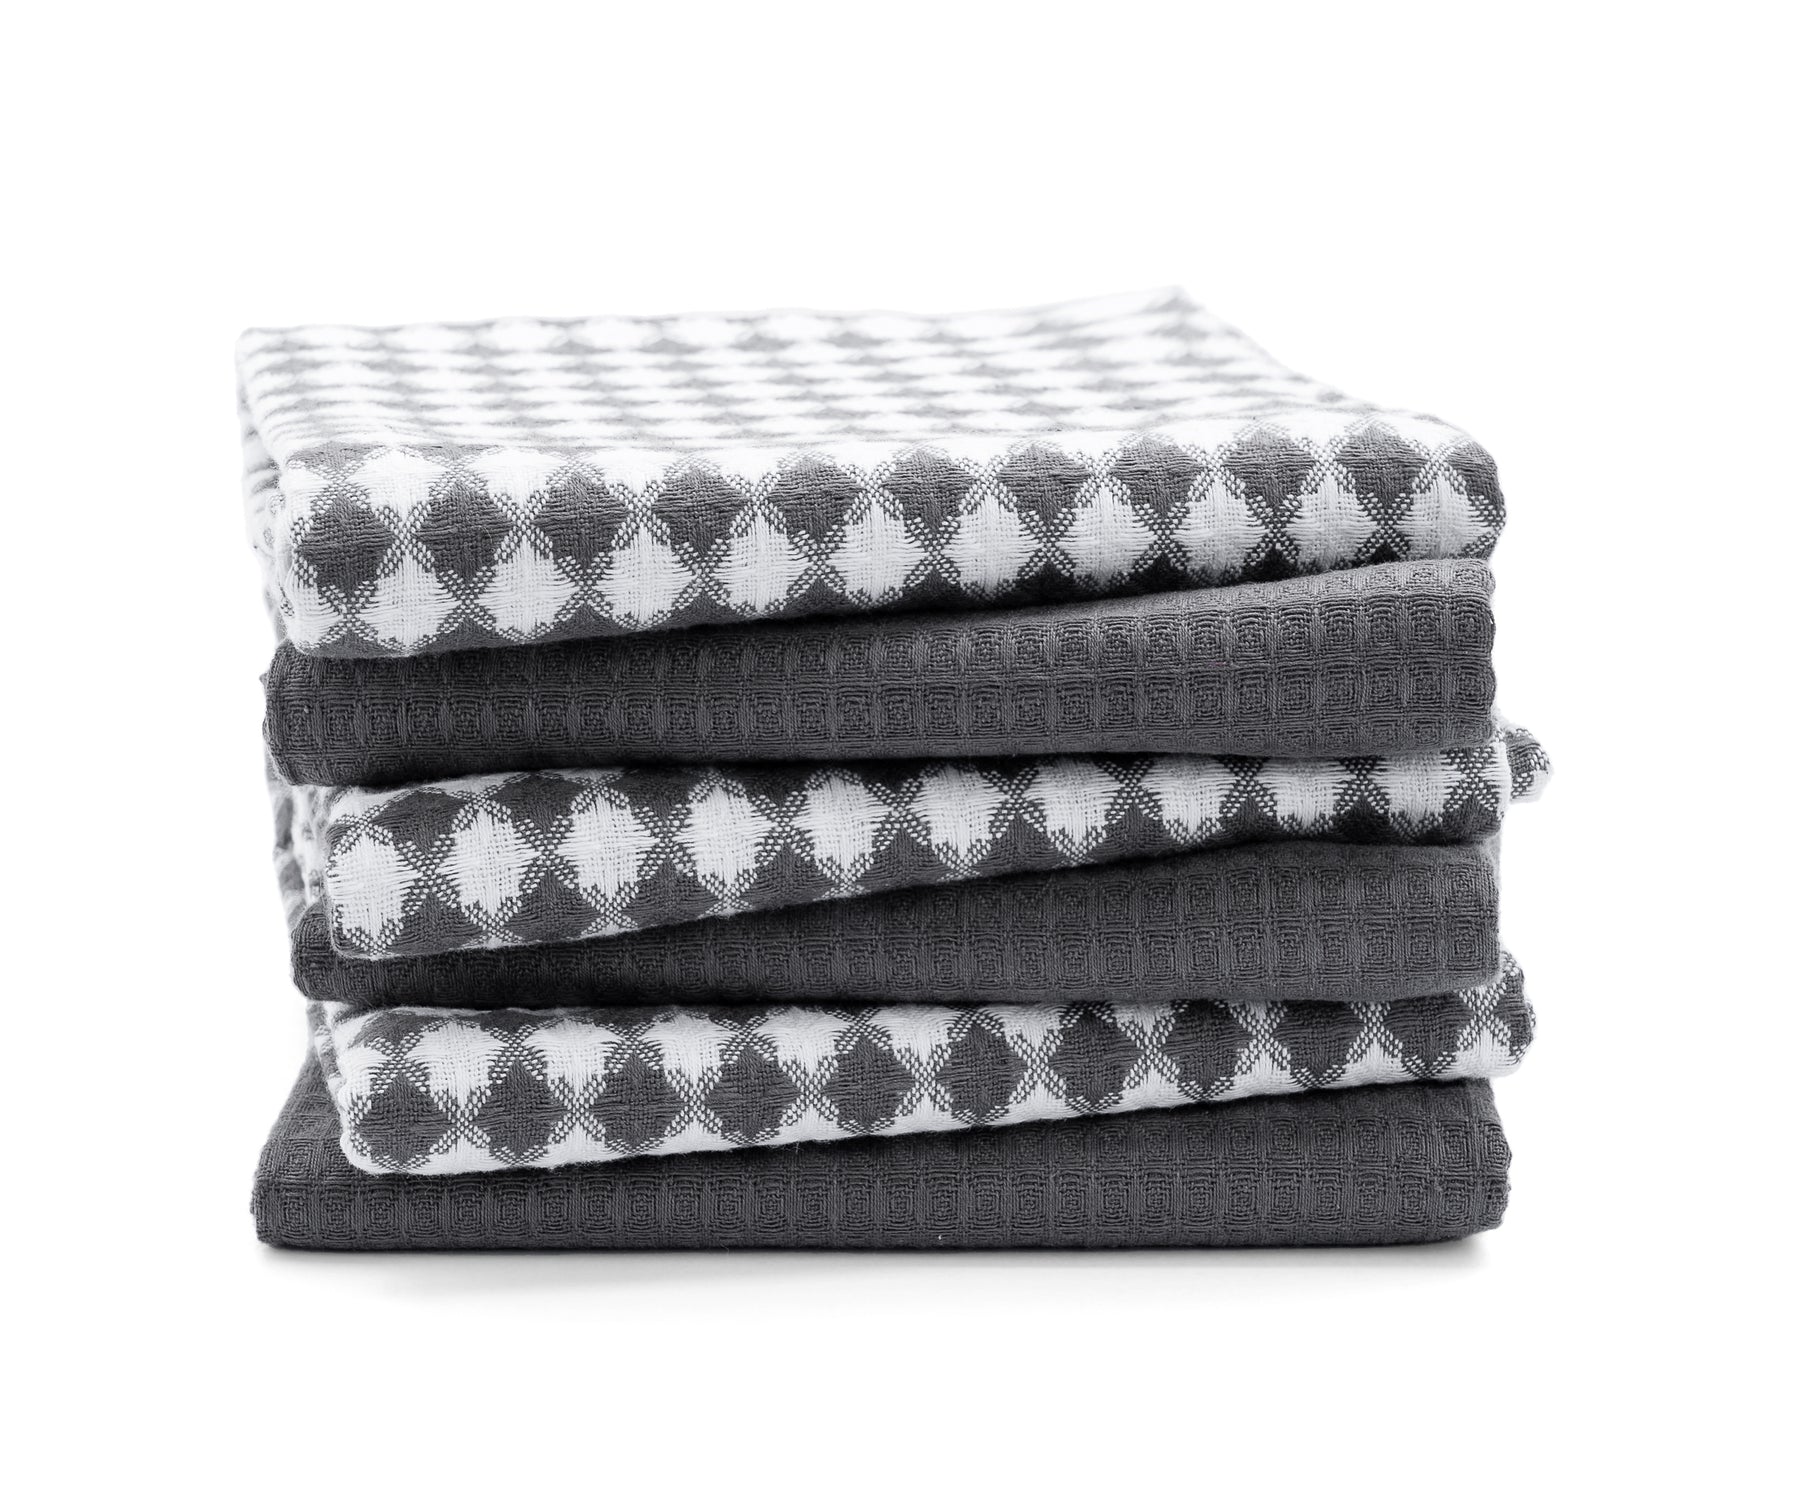 cloth dish towels, gray kitchen towels striped, cotton kitchen towels are absorbent dish towels.